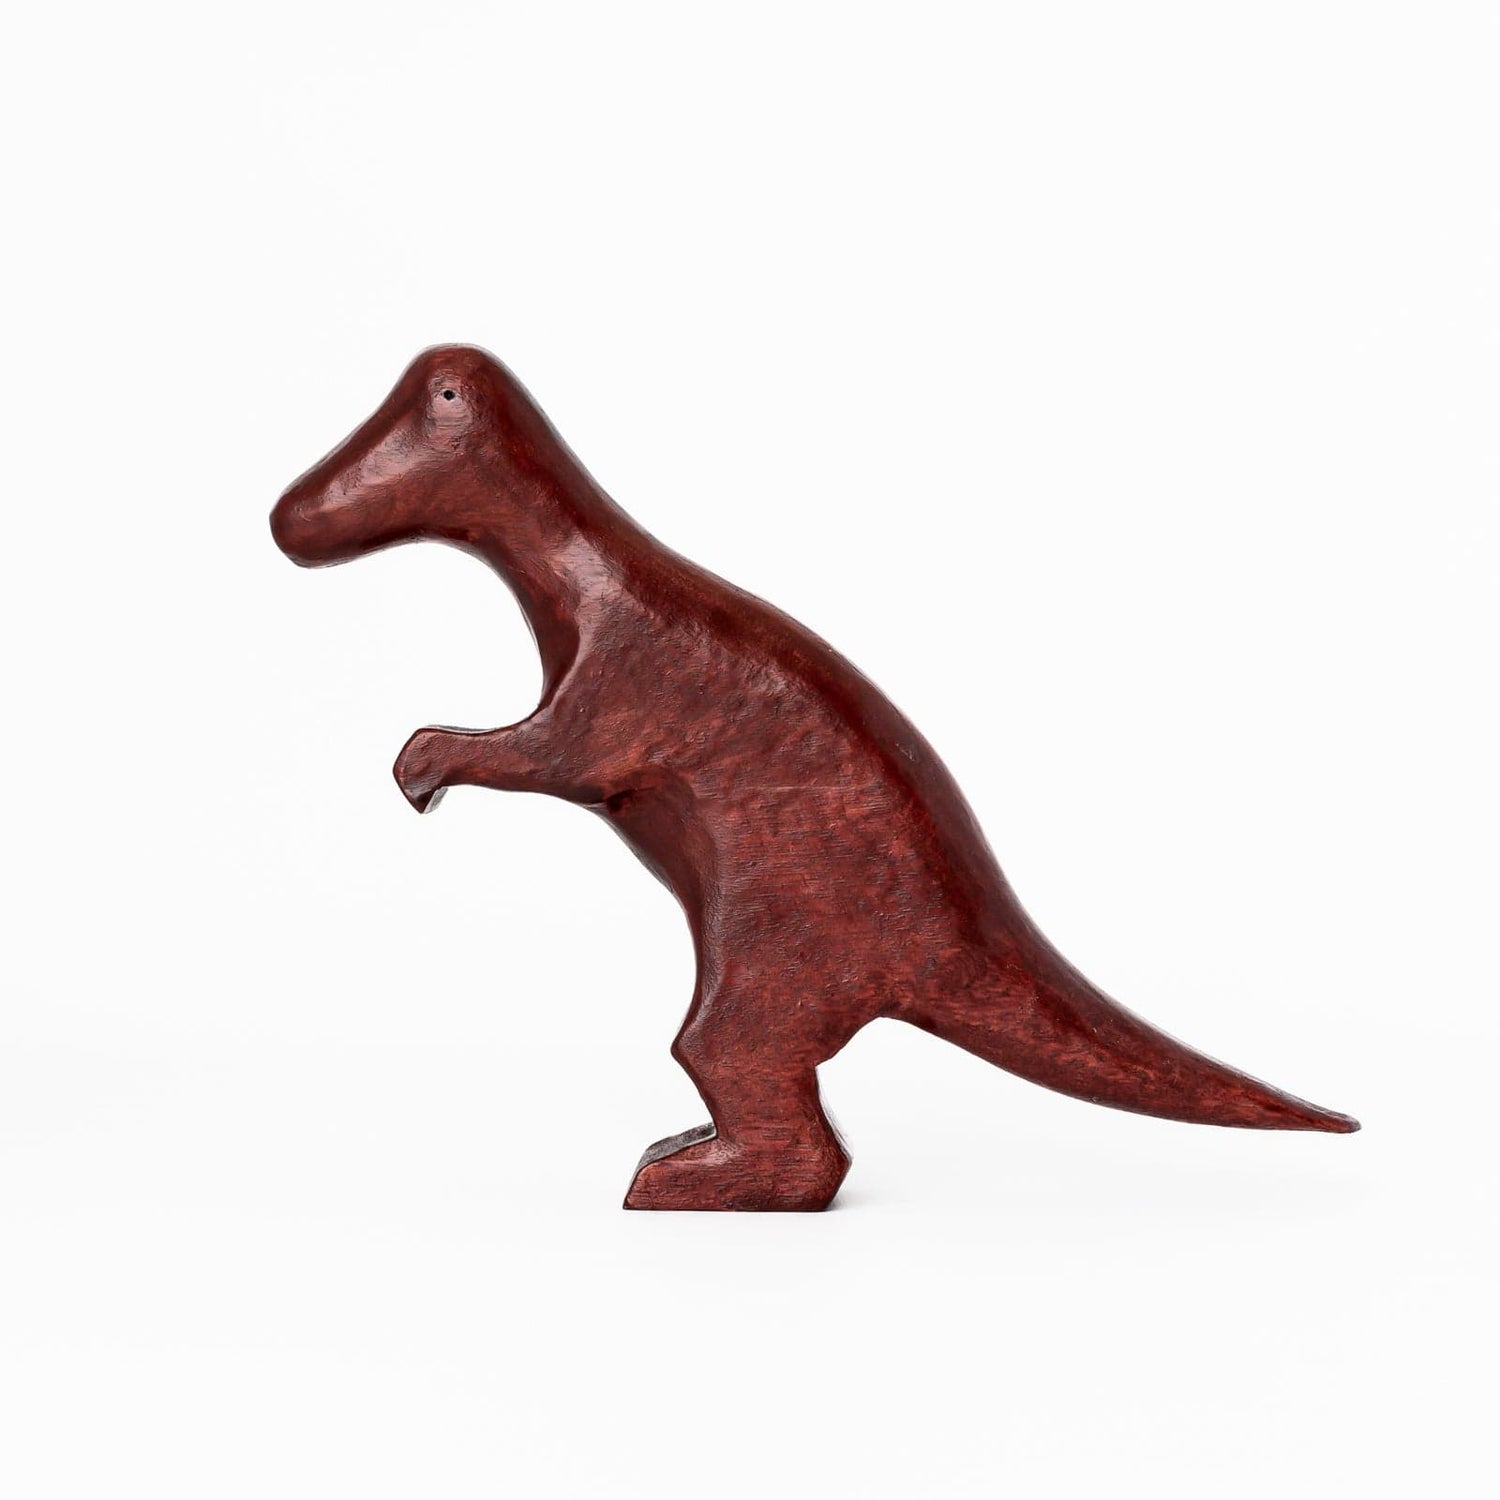 Bumbleberry Toys Wooden Animals "Tennyson  T-Rex" Wooden Dinosaur Toy (Handmade in Canada)